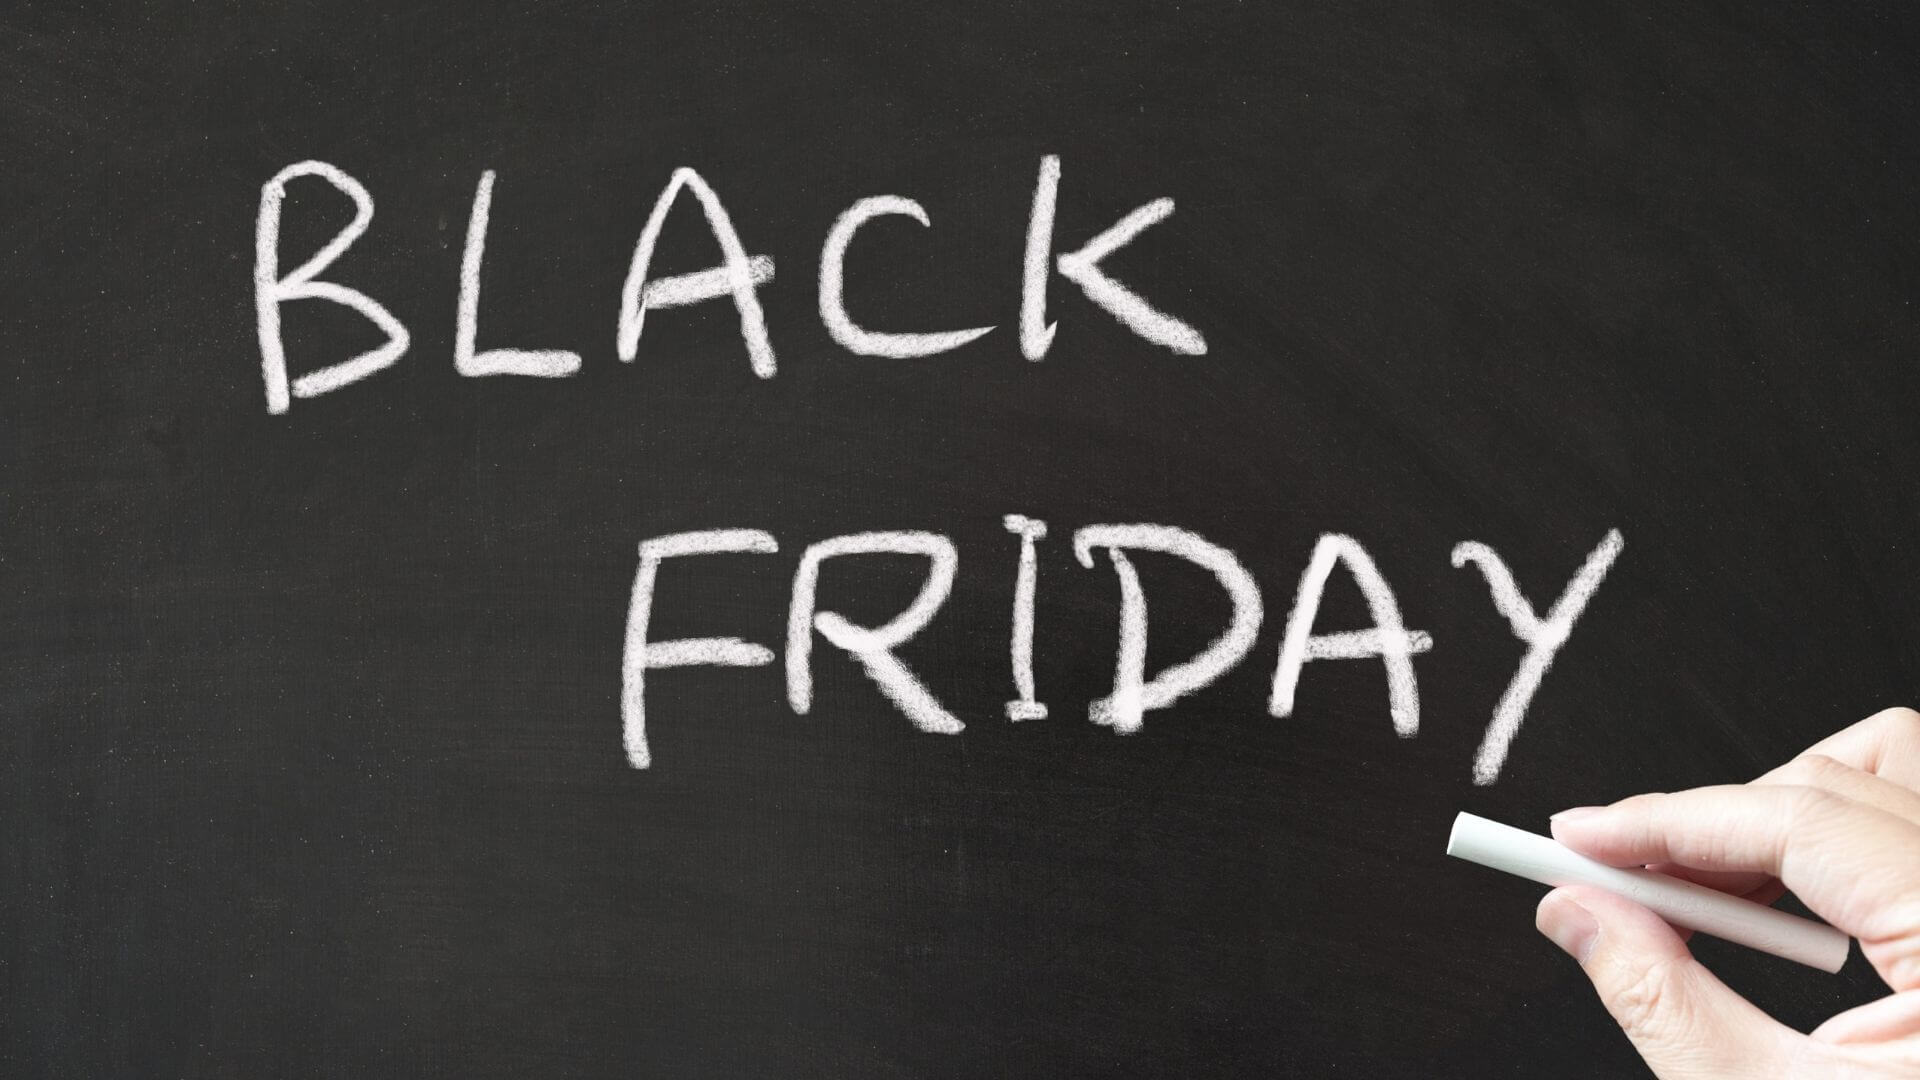 Black Friday: 5 dicas para impulsionar suas vendas - TecMundo